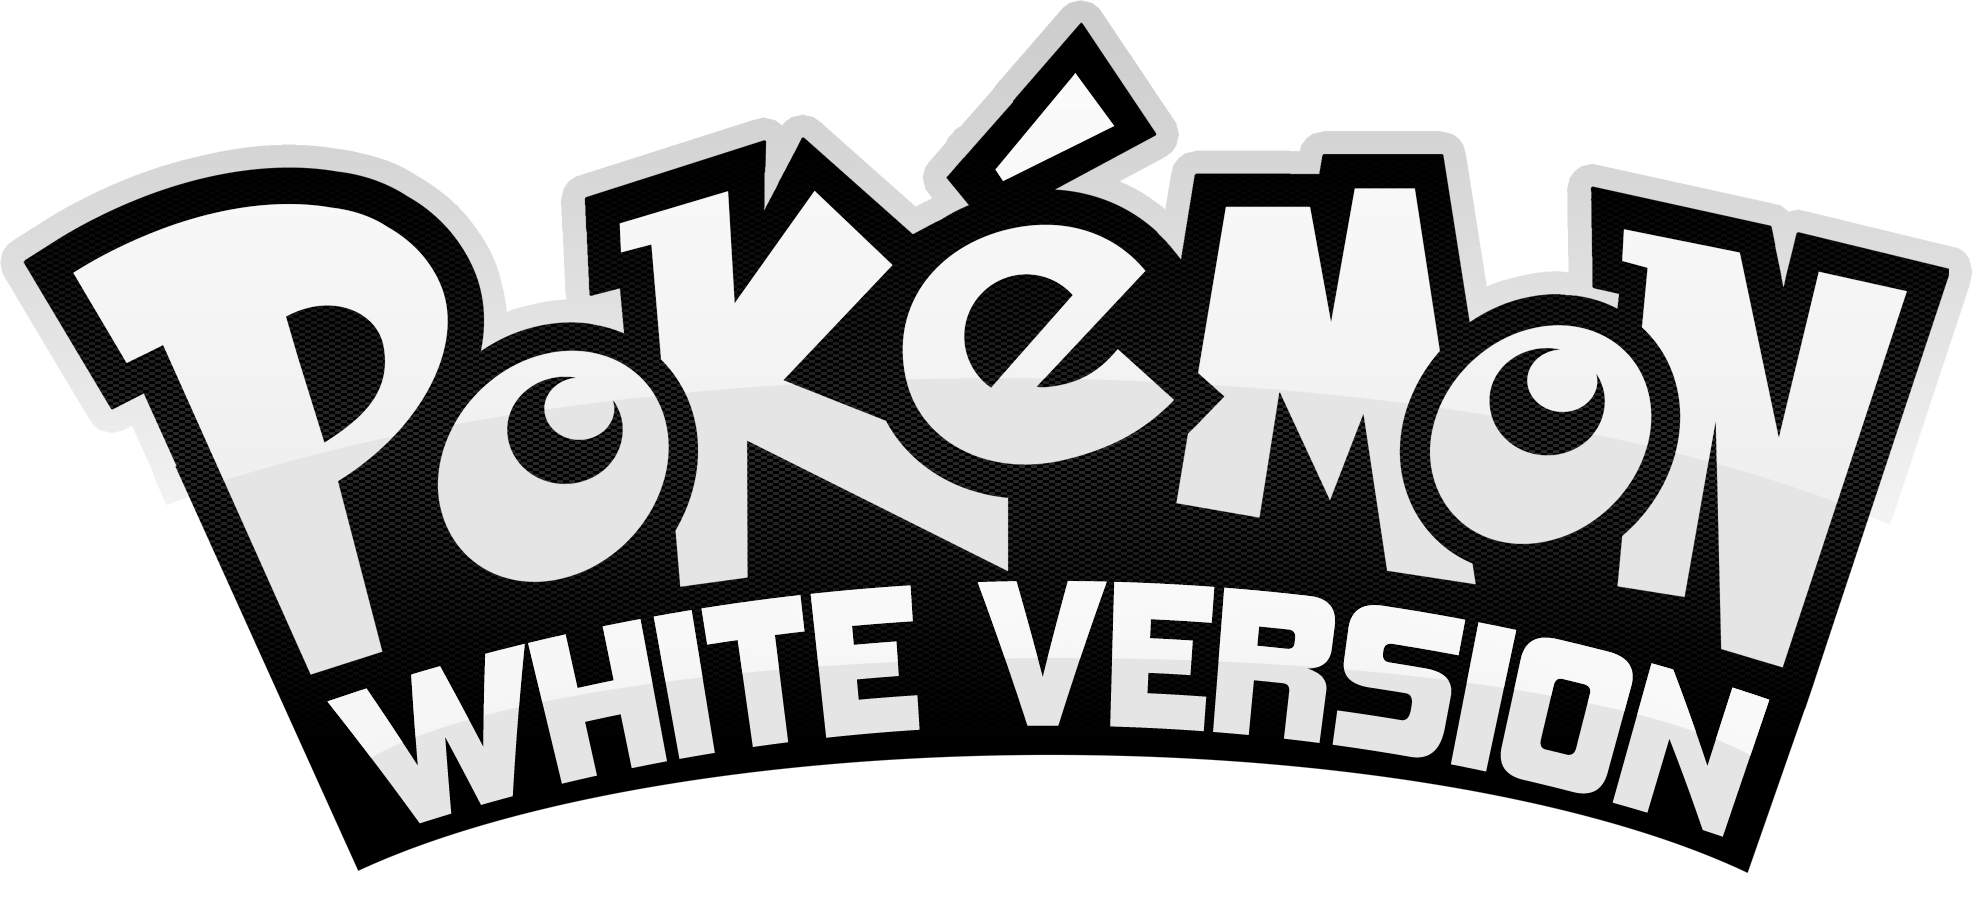 Pokemon Black and White Logo - Pokémon Autograph Editor 1.1. GBAtemp.net Independent Video